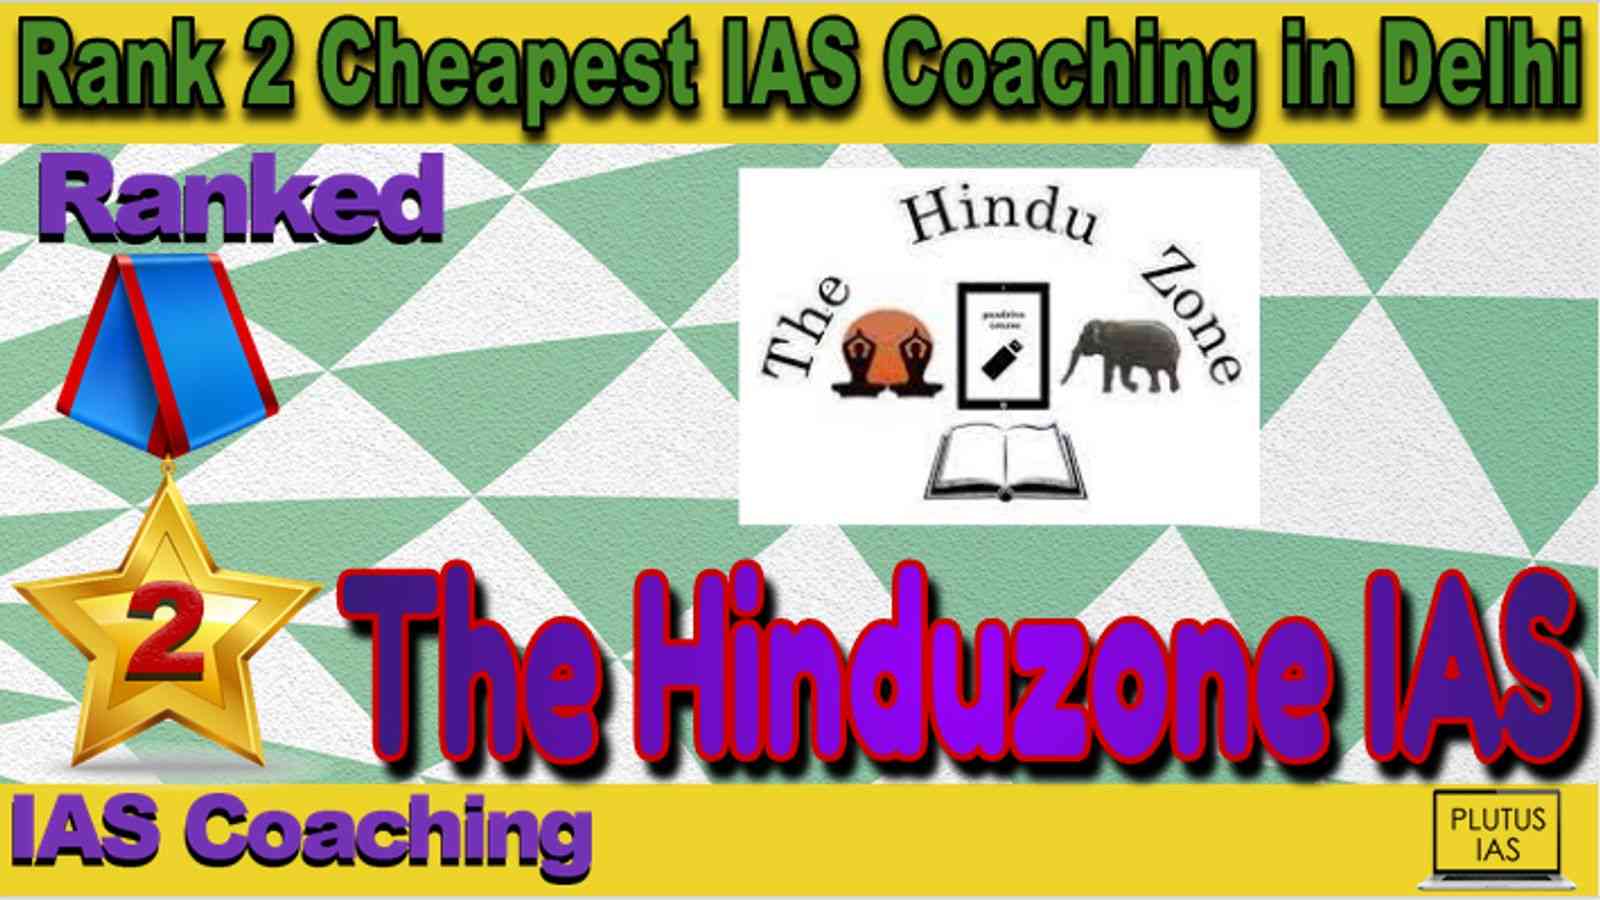 Rank 2 Cheapest IAS Coaching in Delhi